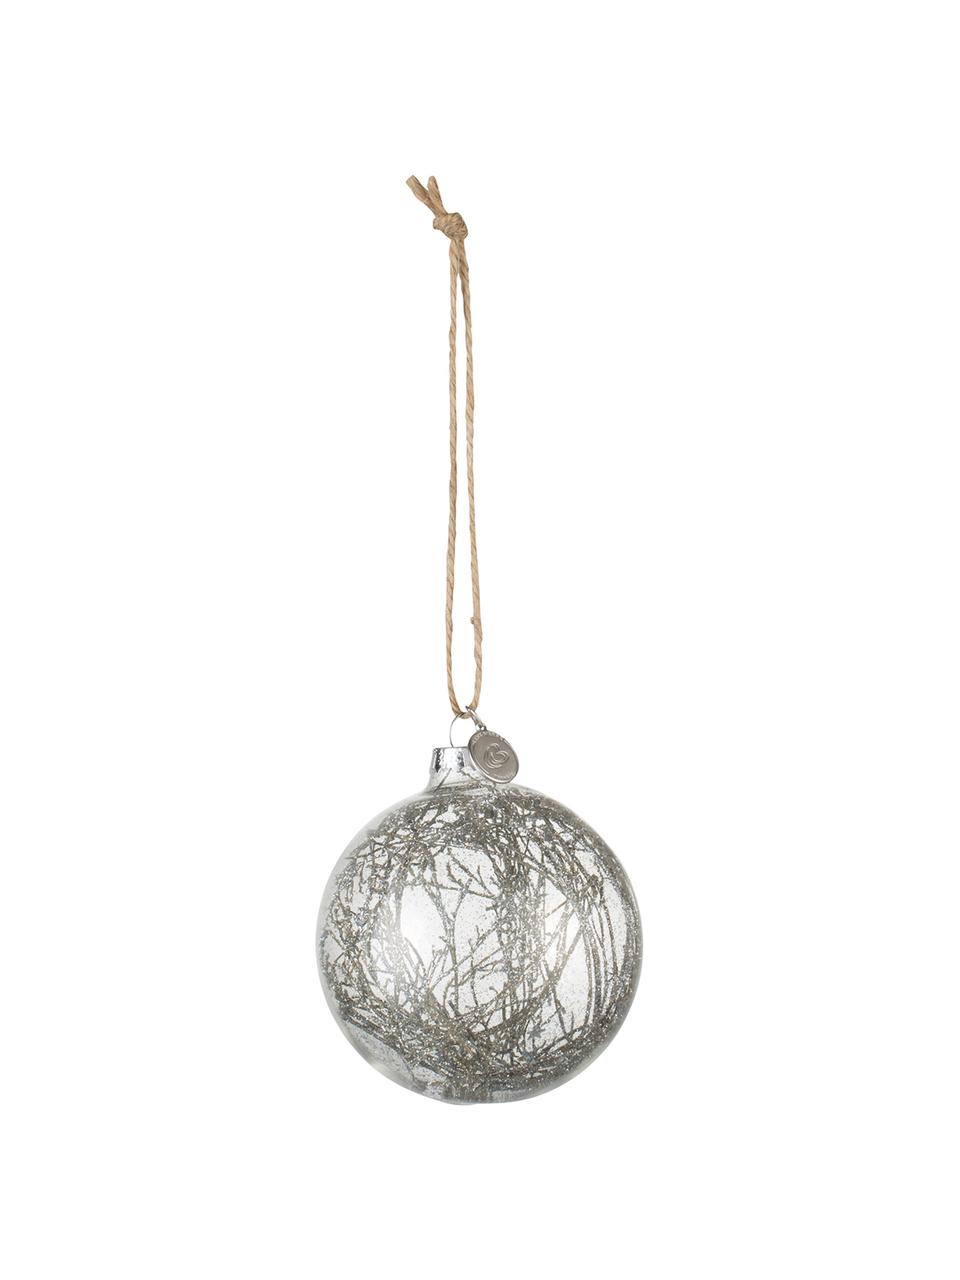 Kerstballen Mernia, 2 stuks, Ophanglus: jute, Transparant, zilverkleurig, Ø 8 cm